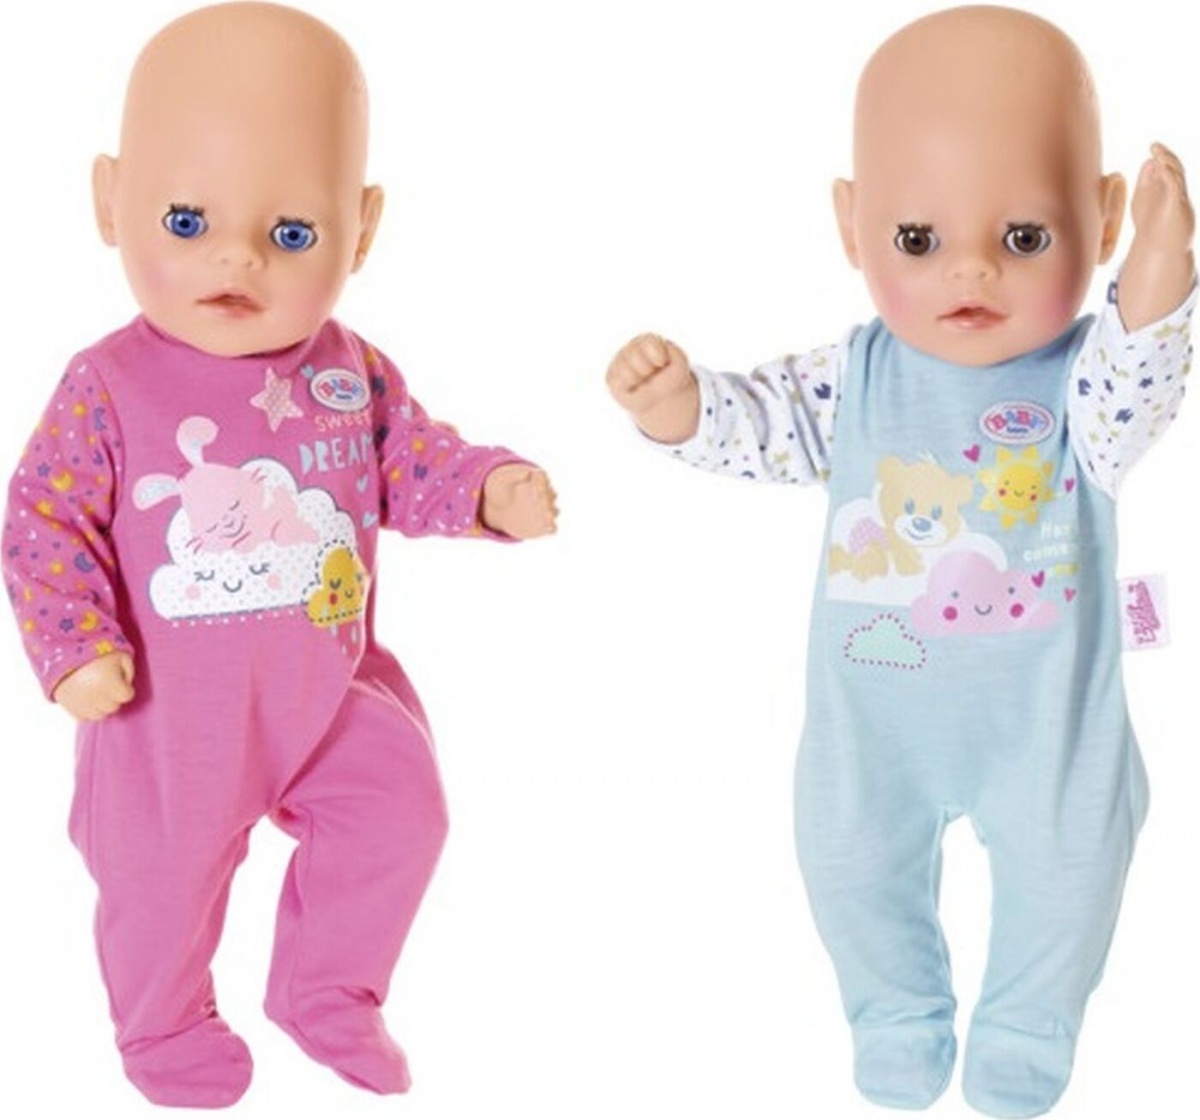  Одежда для куклы My Little Baby born - Ночные комбинезончики, 36 см, вешалка, 2 вида (Zapf Creation, 826 